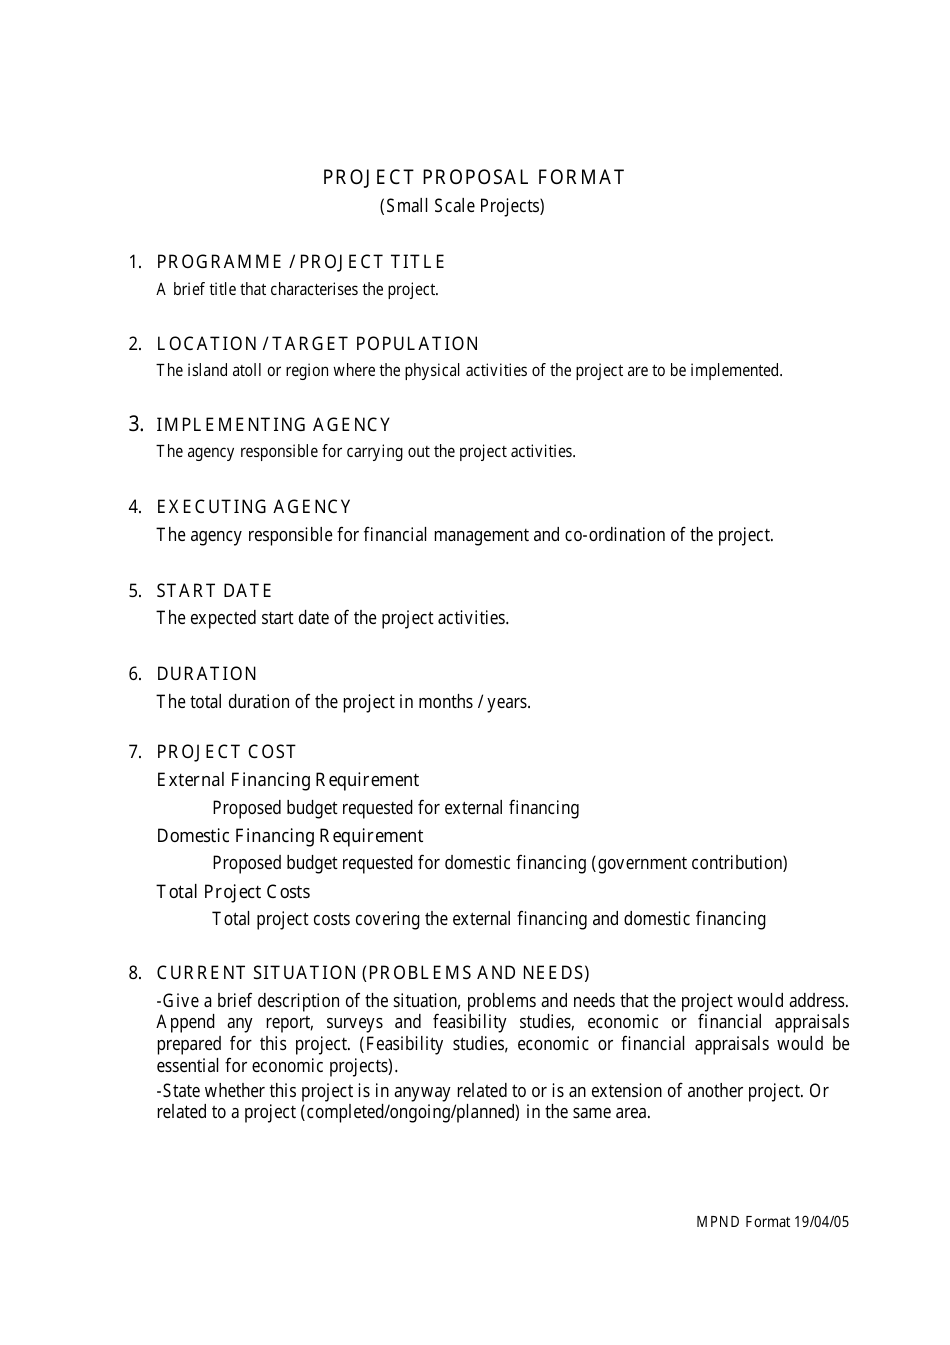 Project Proposal Format - Maldives, Page 1